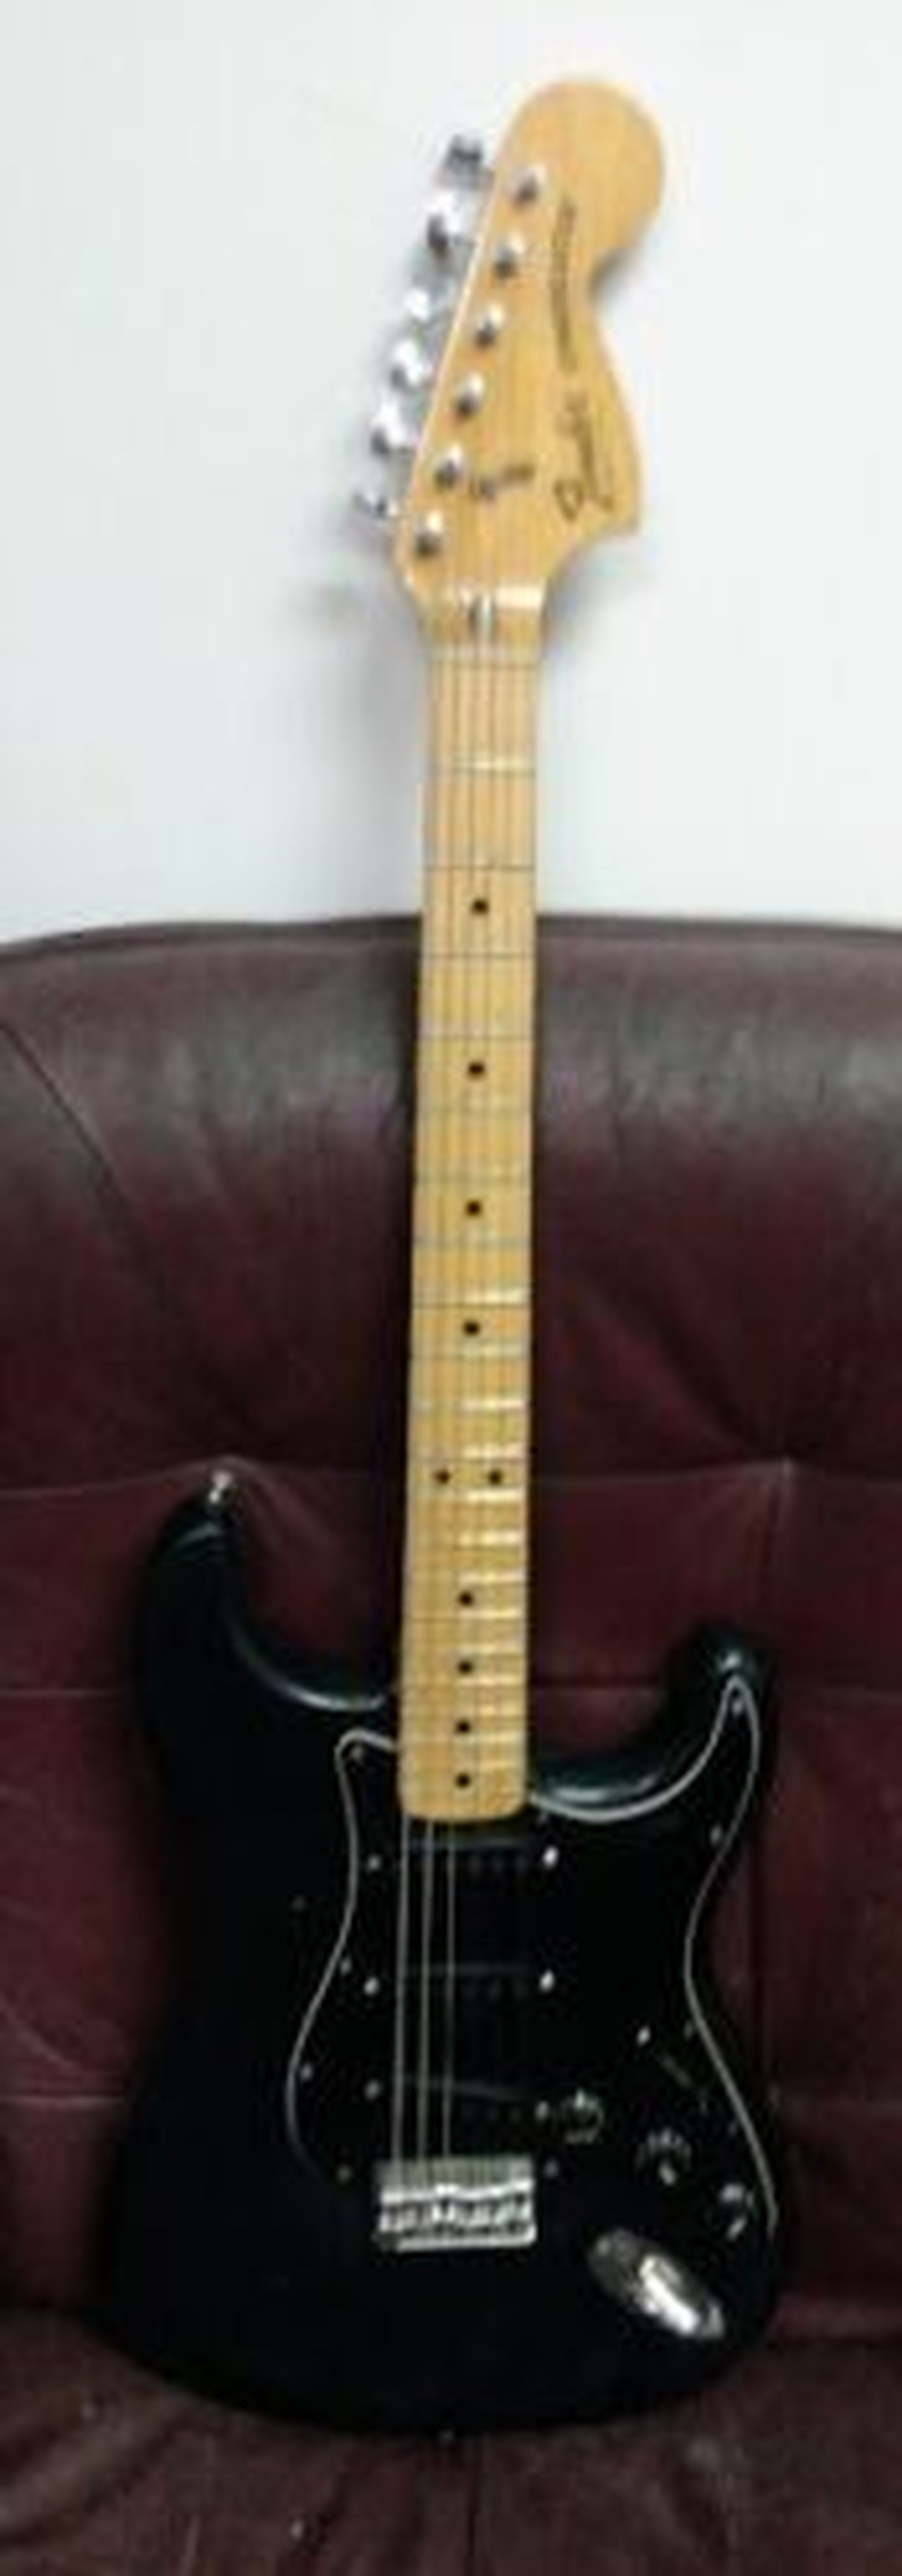 Fender Stratocaster Hardtail de 1977.